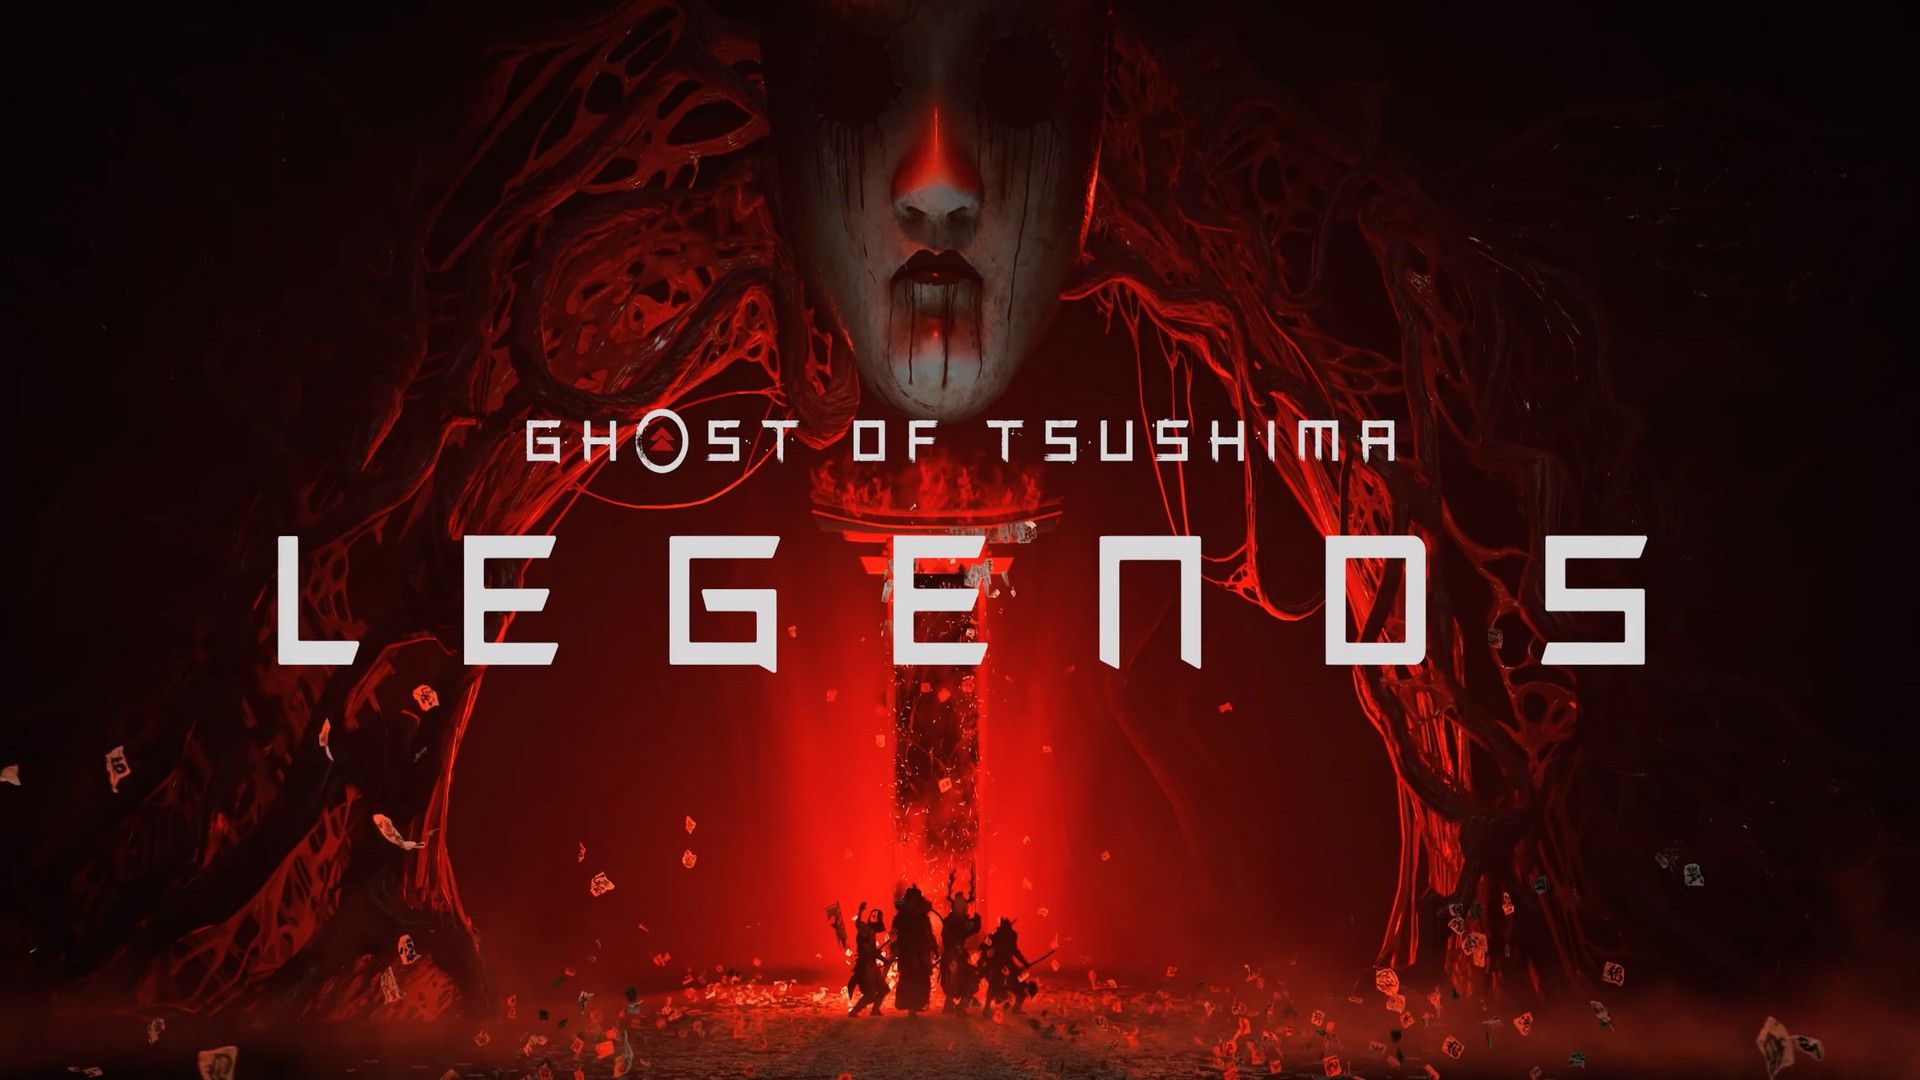 Ghost of Tsushima: Legends เตรียมวางจำหน่ายในรูปแบบสแตนด์อโลน พร้อมเพิ่มโหมดใหม่ “Rivals” ในวันที่ 3 กันยายนนี้